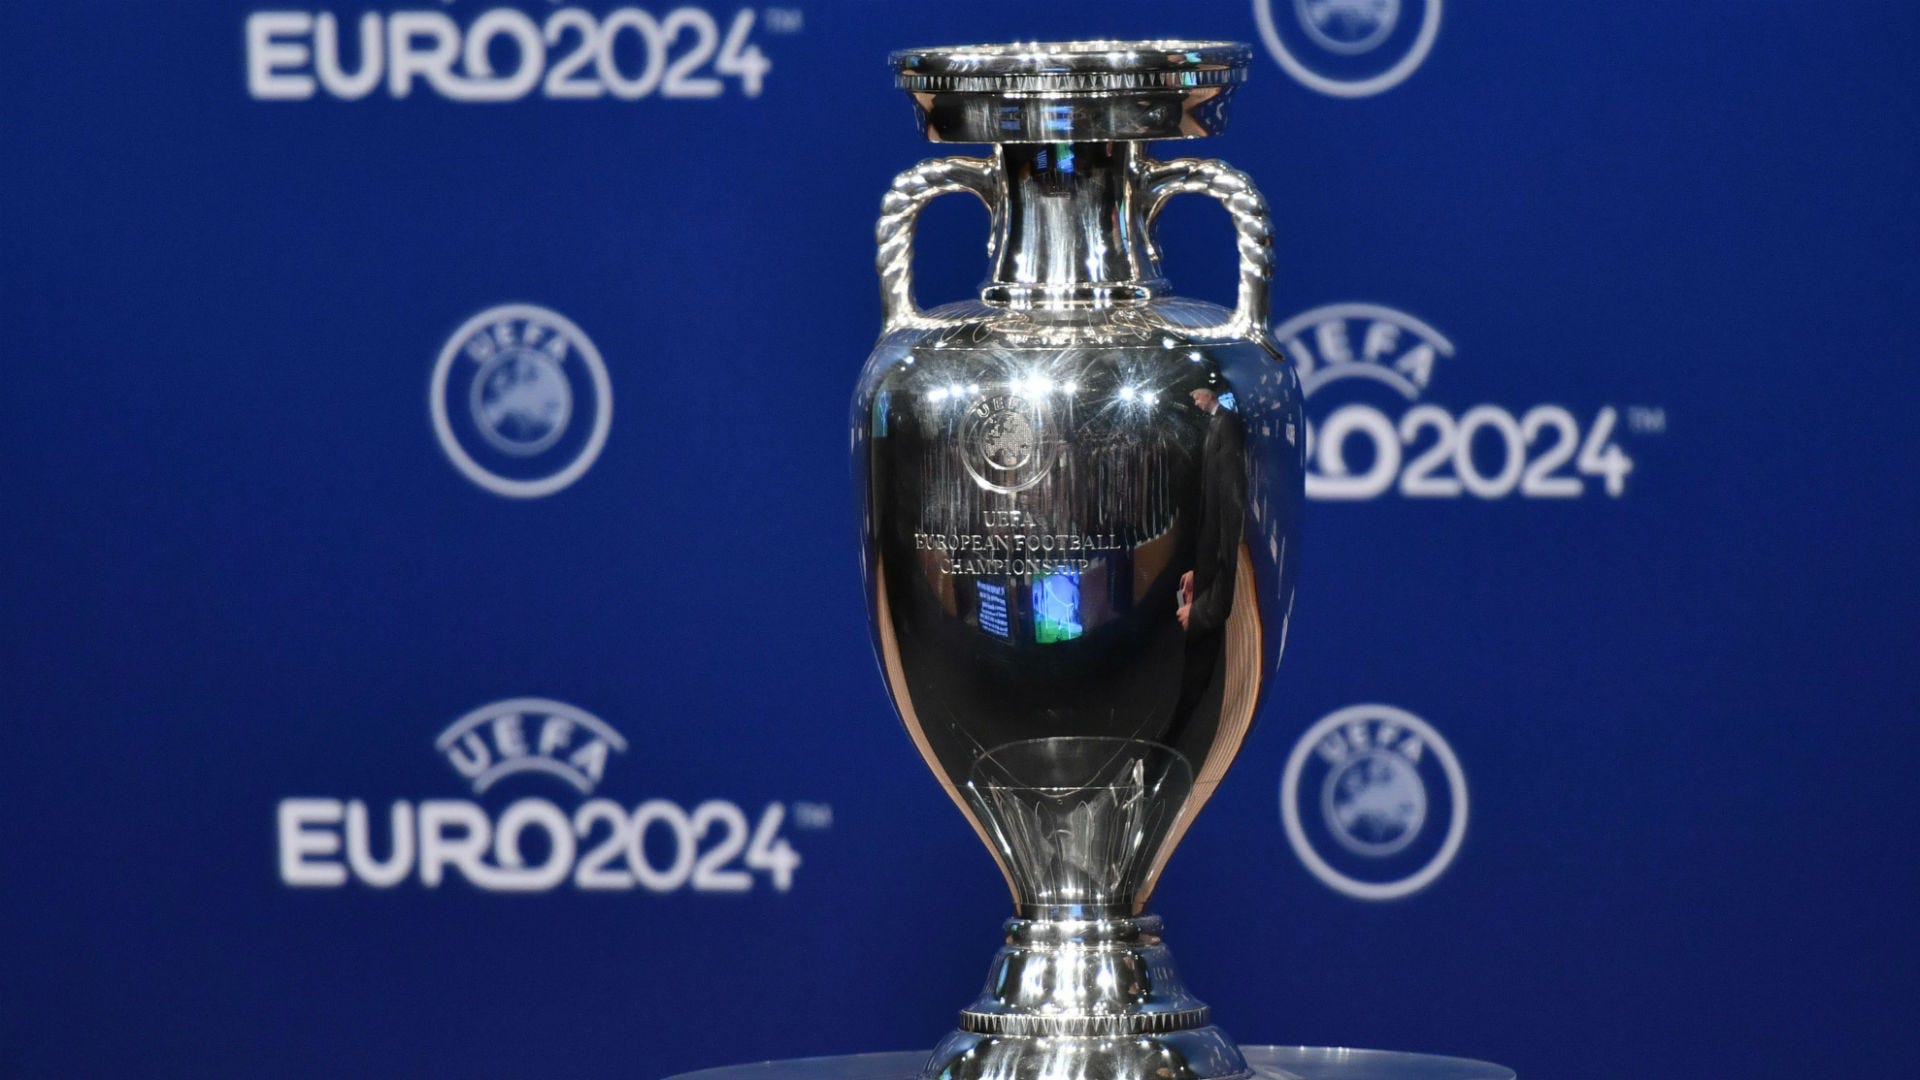 Euro 2024 European Championship trophy